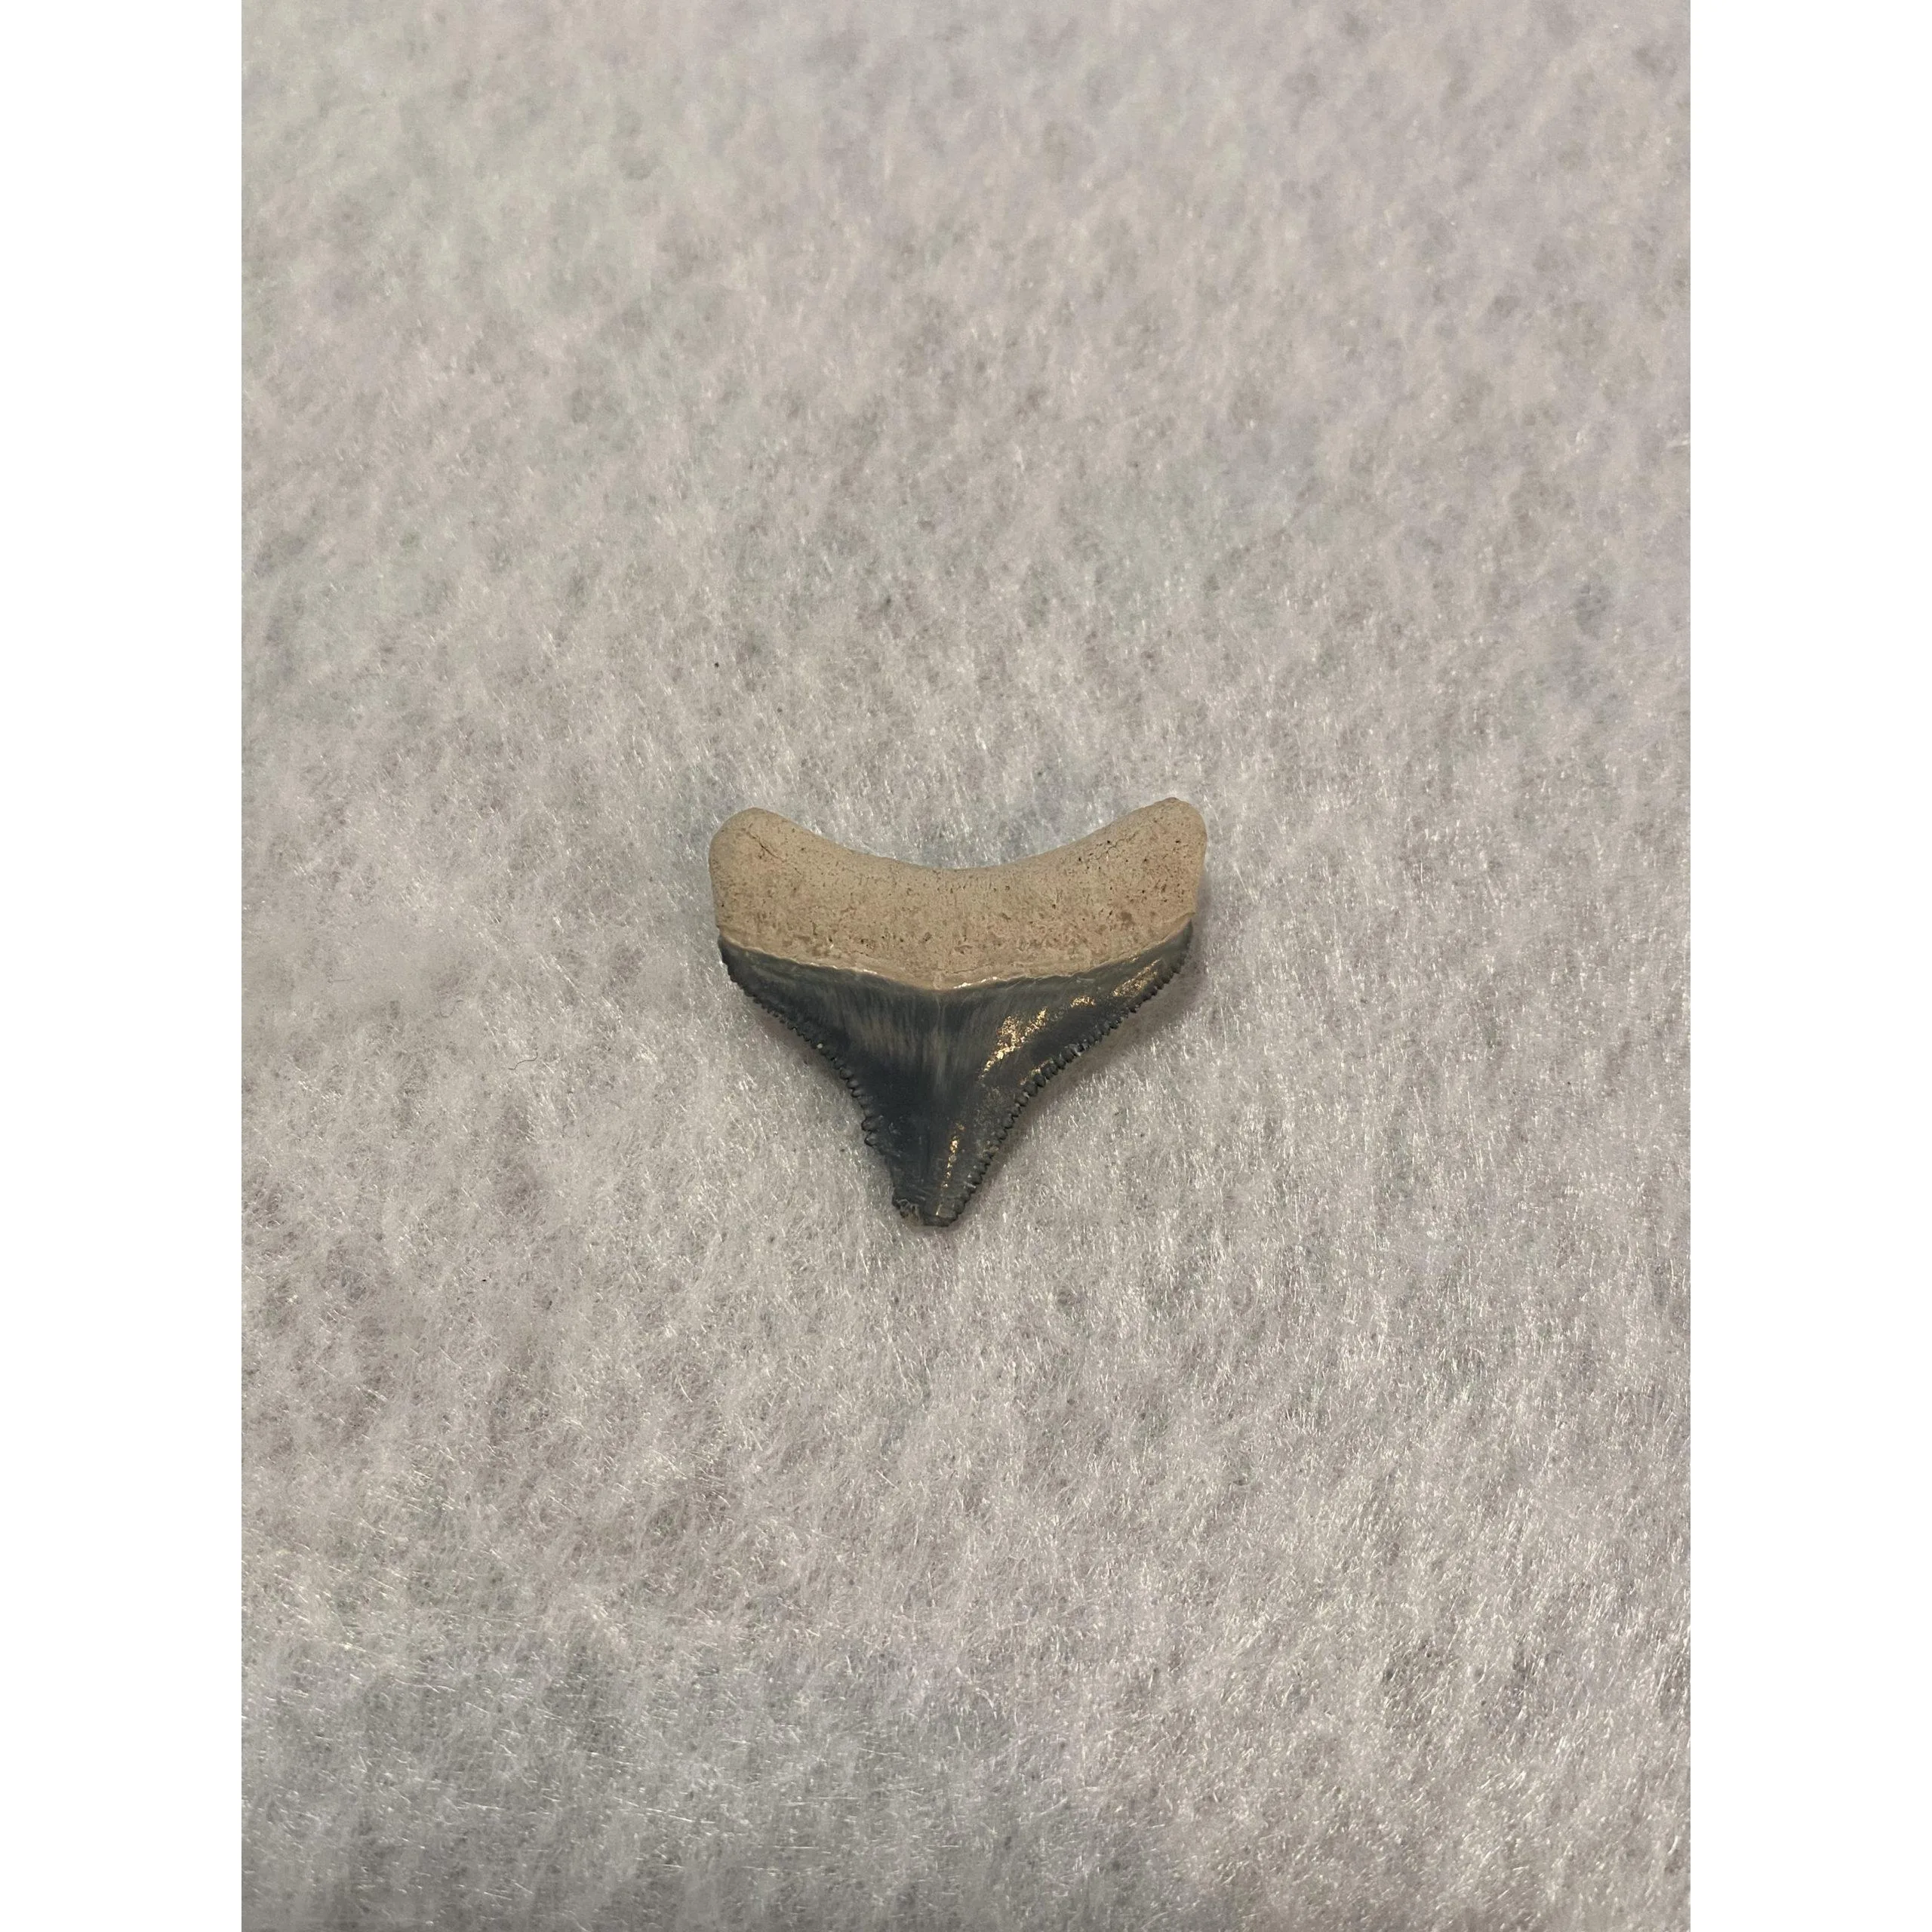 Megalodon Tooth, Bone Valley, Florida,1.20 inch Prehistoric Online